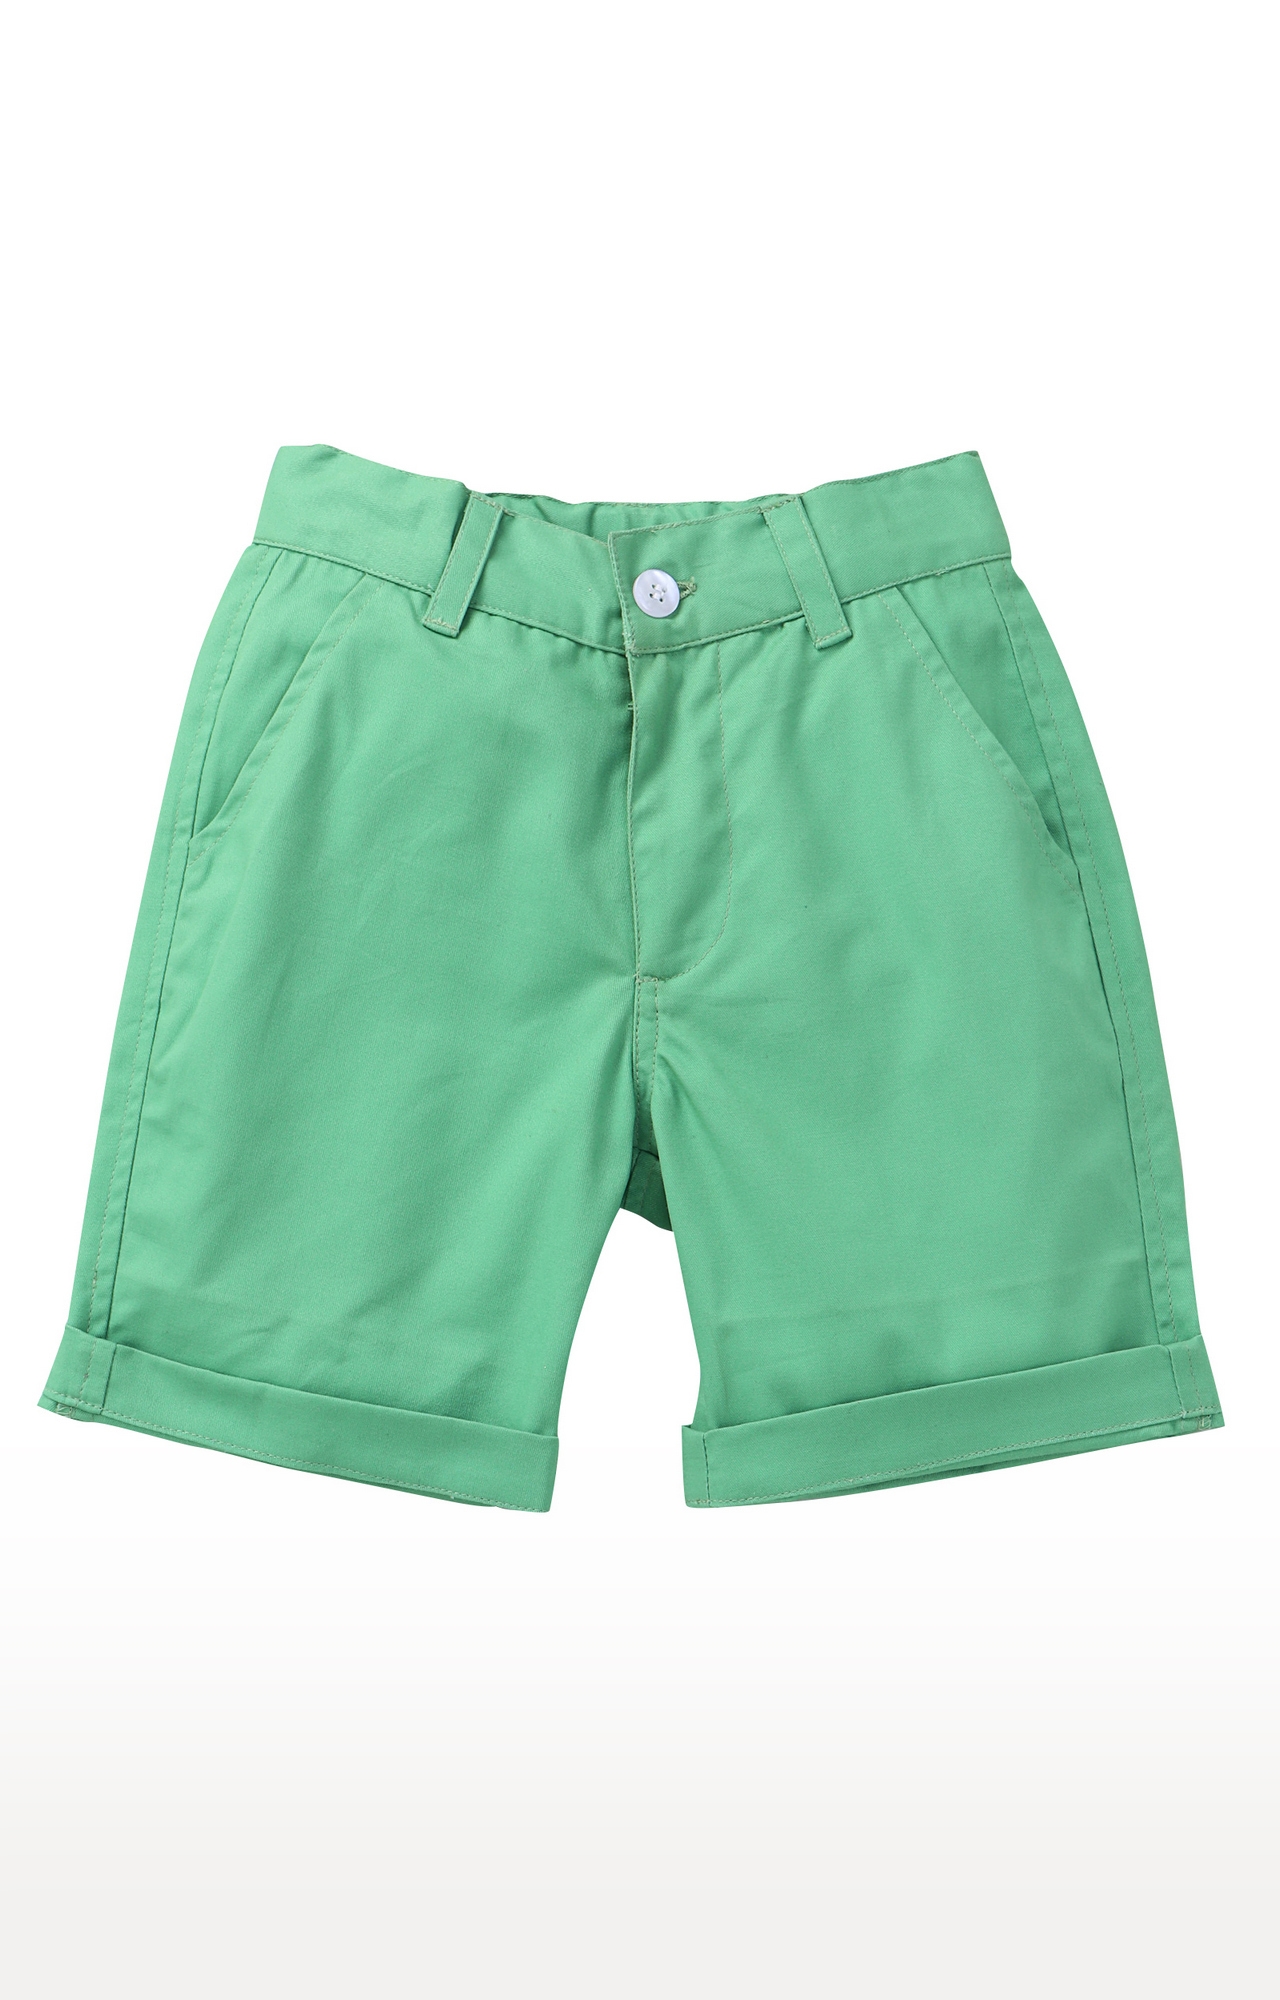 Popsicles Clothing | Popsicles Shamrock Shorts Regular Fit For Boys 0